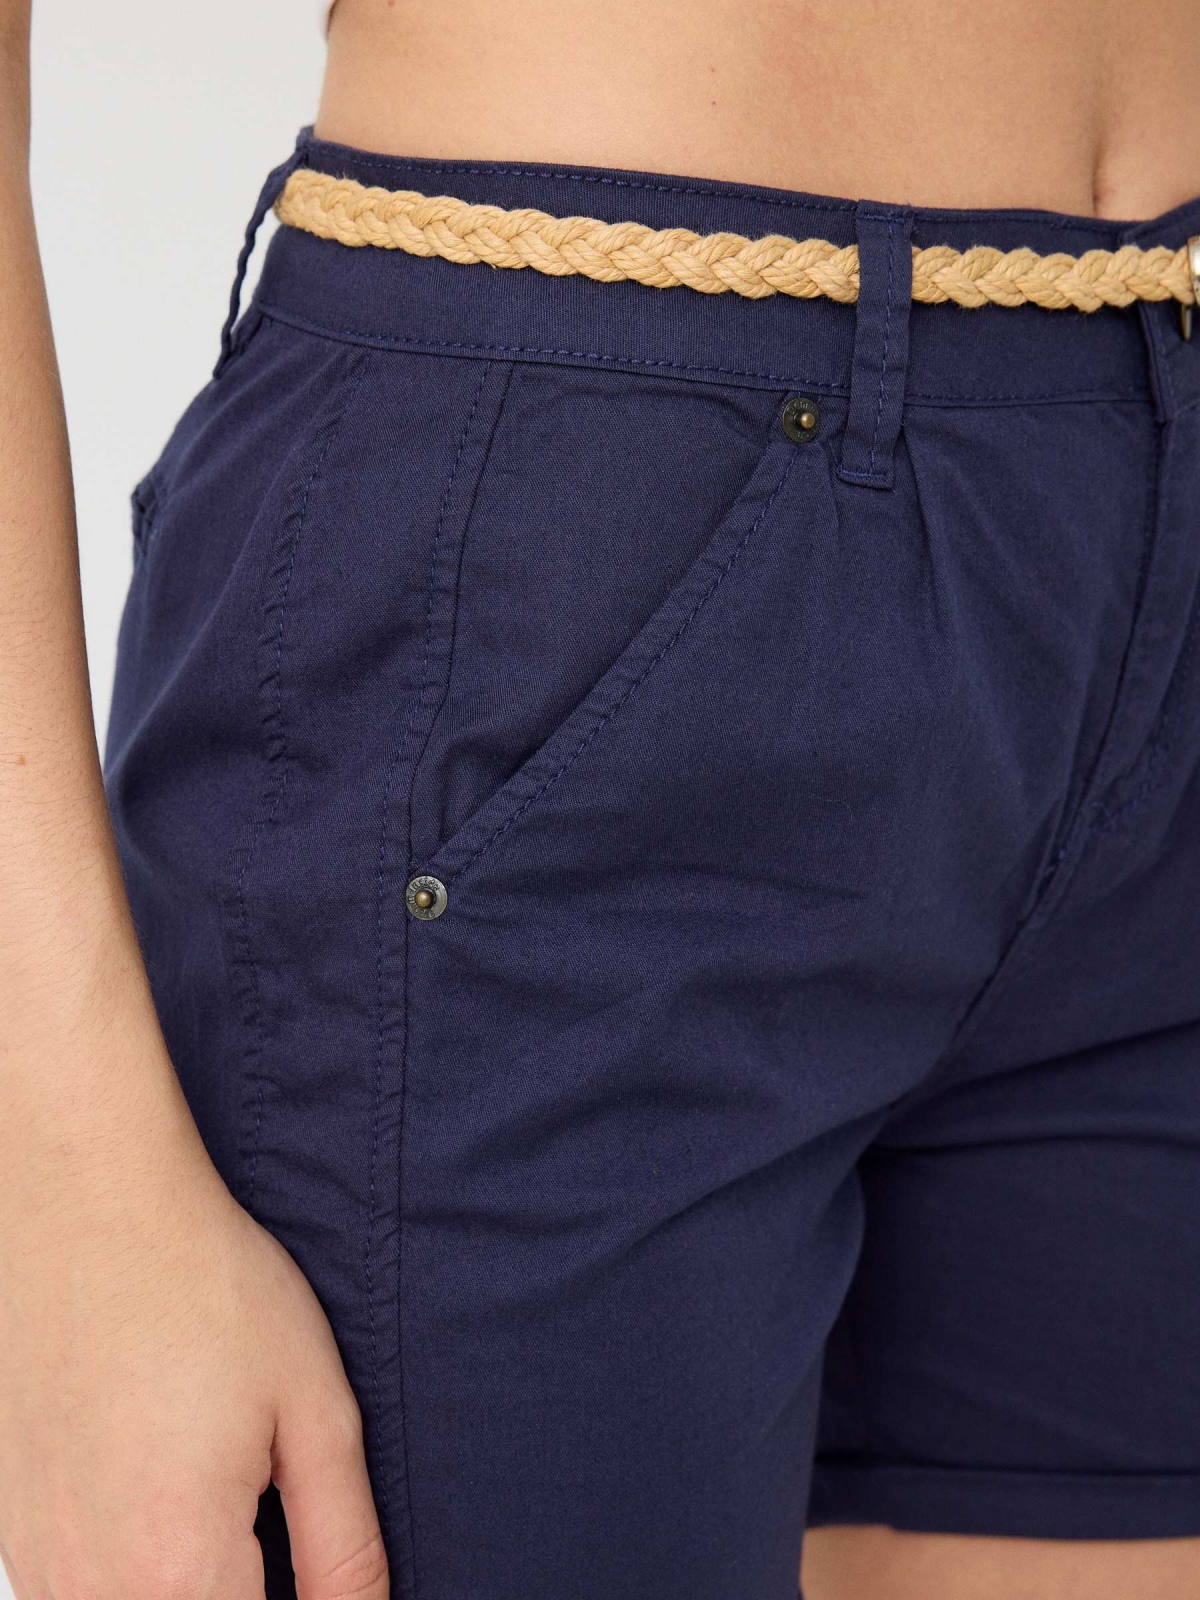 Braided belt shorts blue detail view